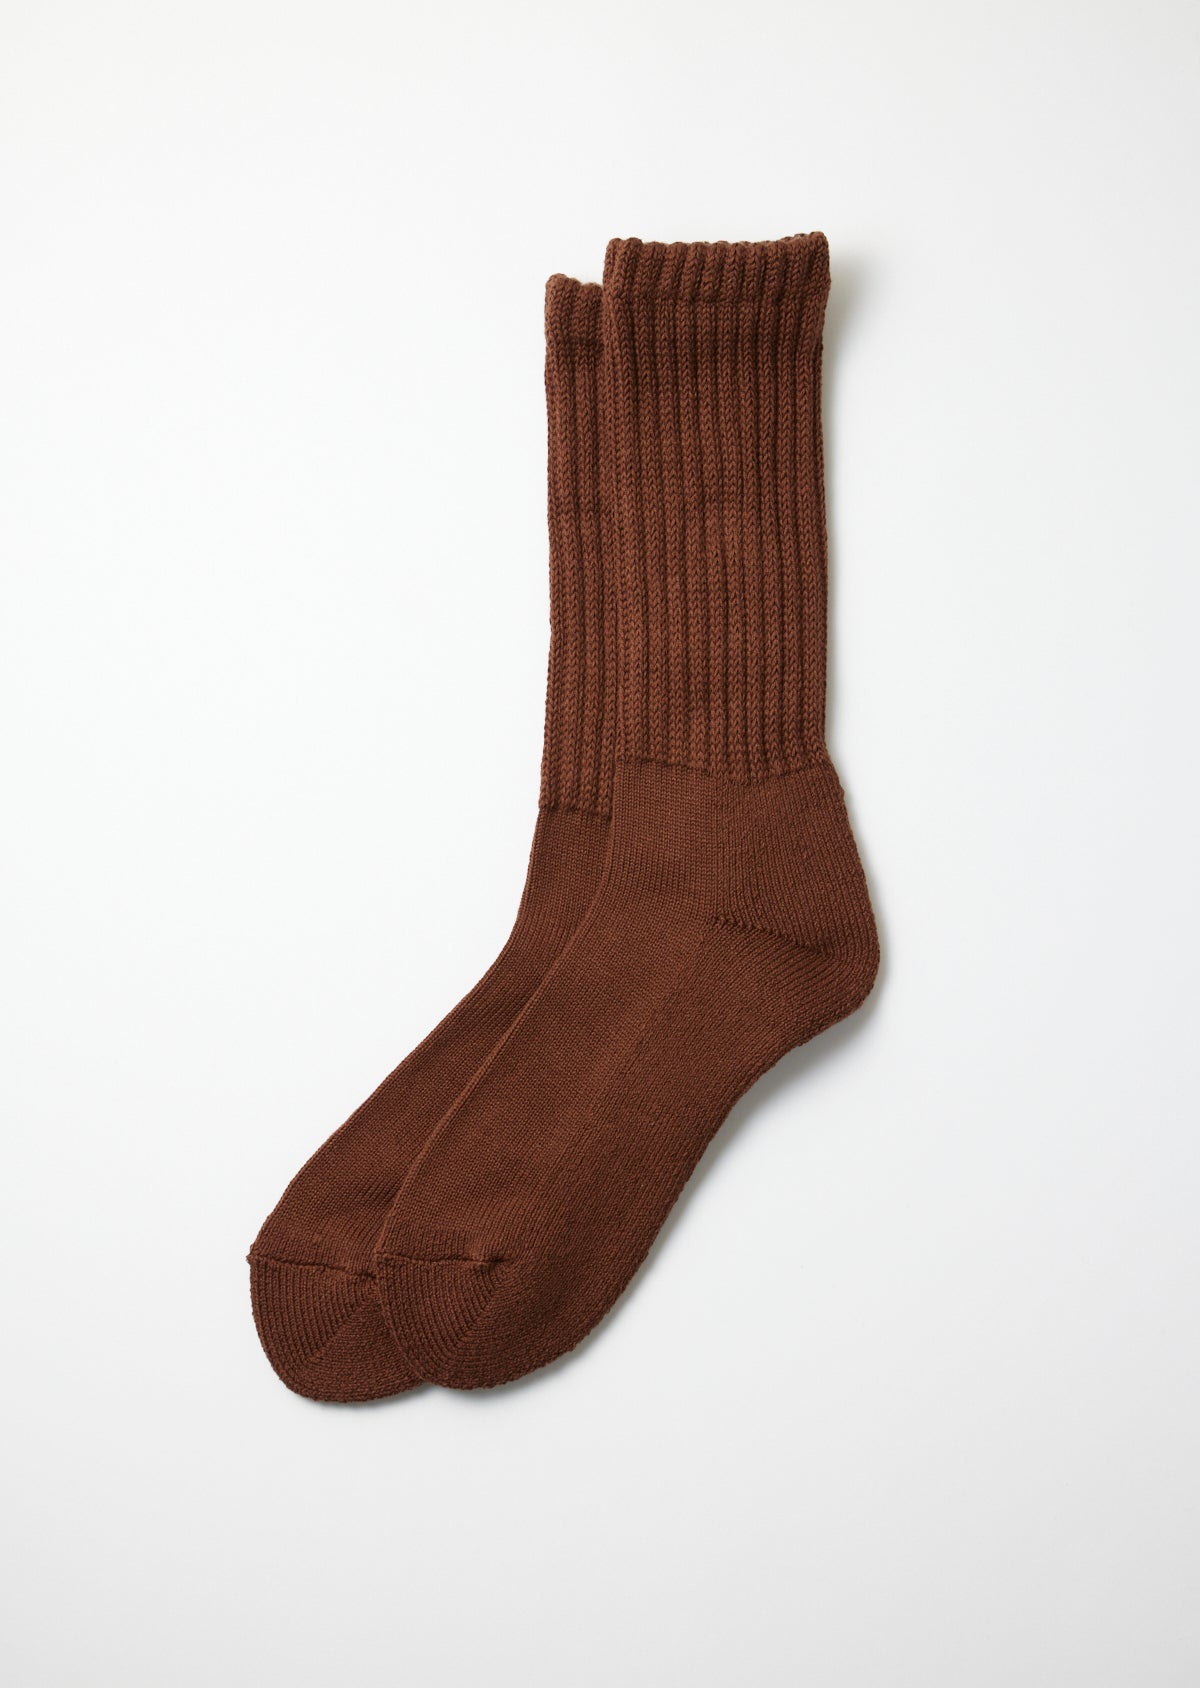 
                  
                    Loose Pile Crew Socks - Chocolate - R1334
                  
                